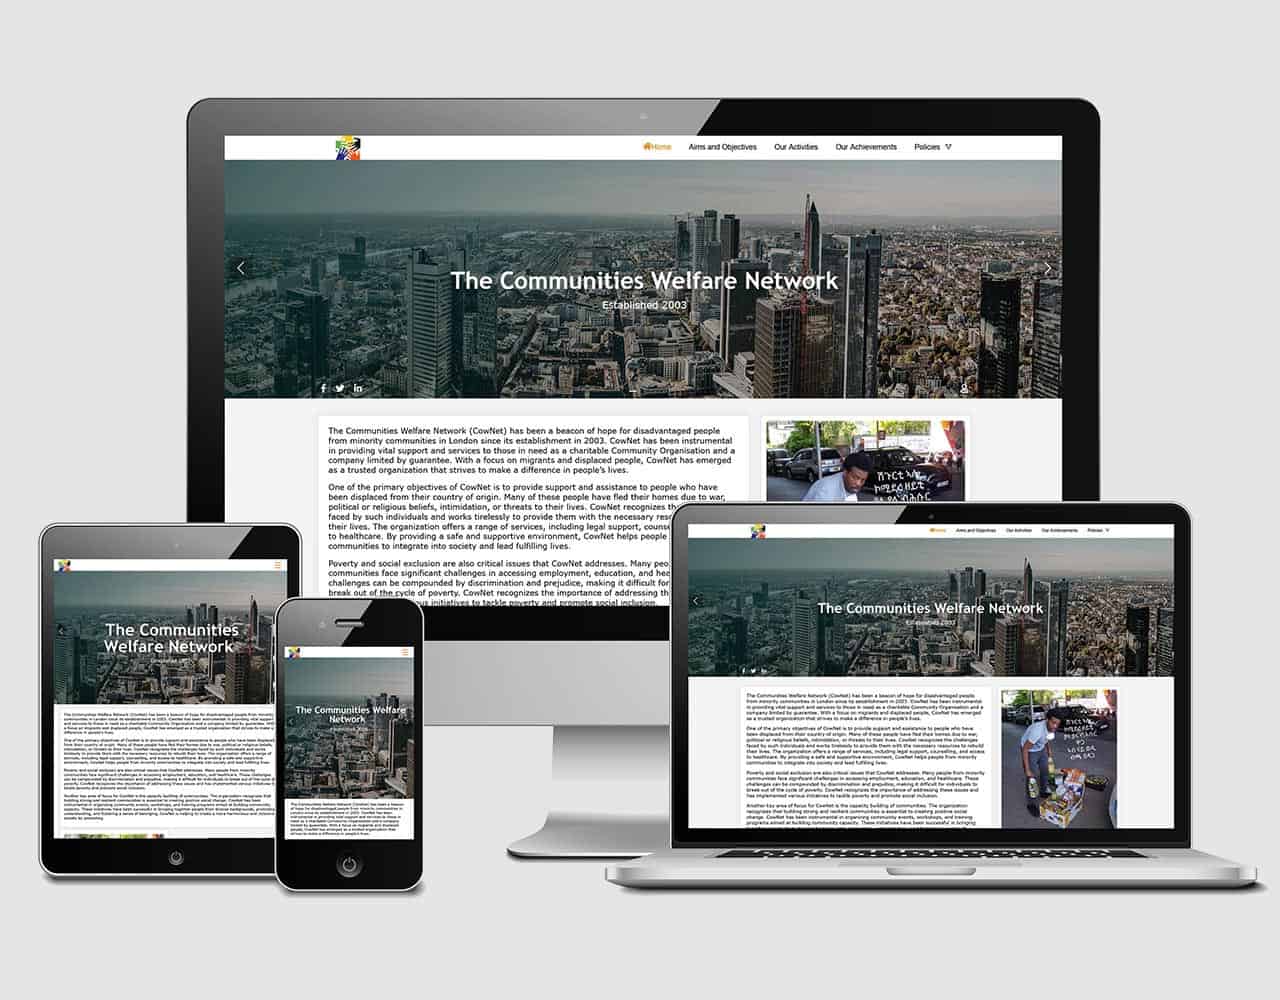 M-site-Featured-Images-Web-Design-Cowelfare